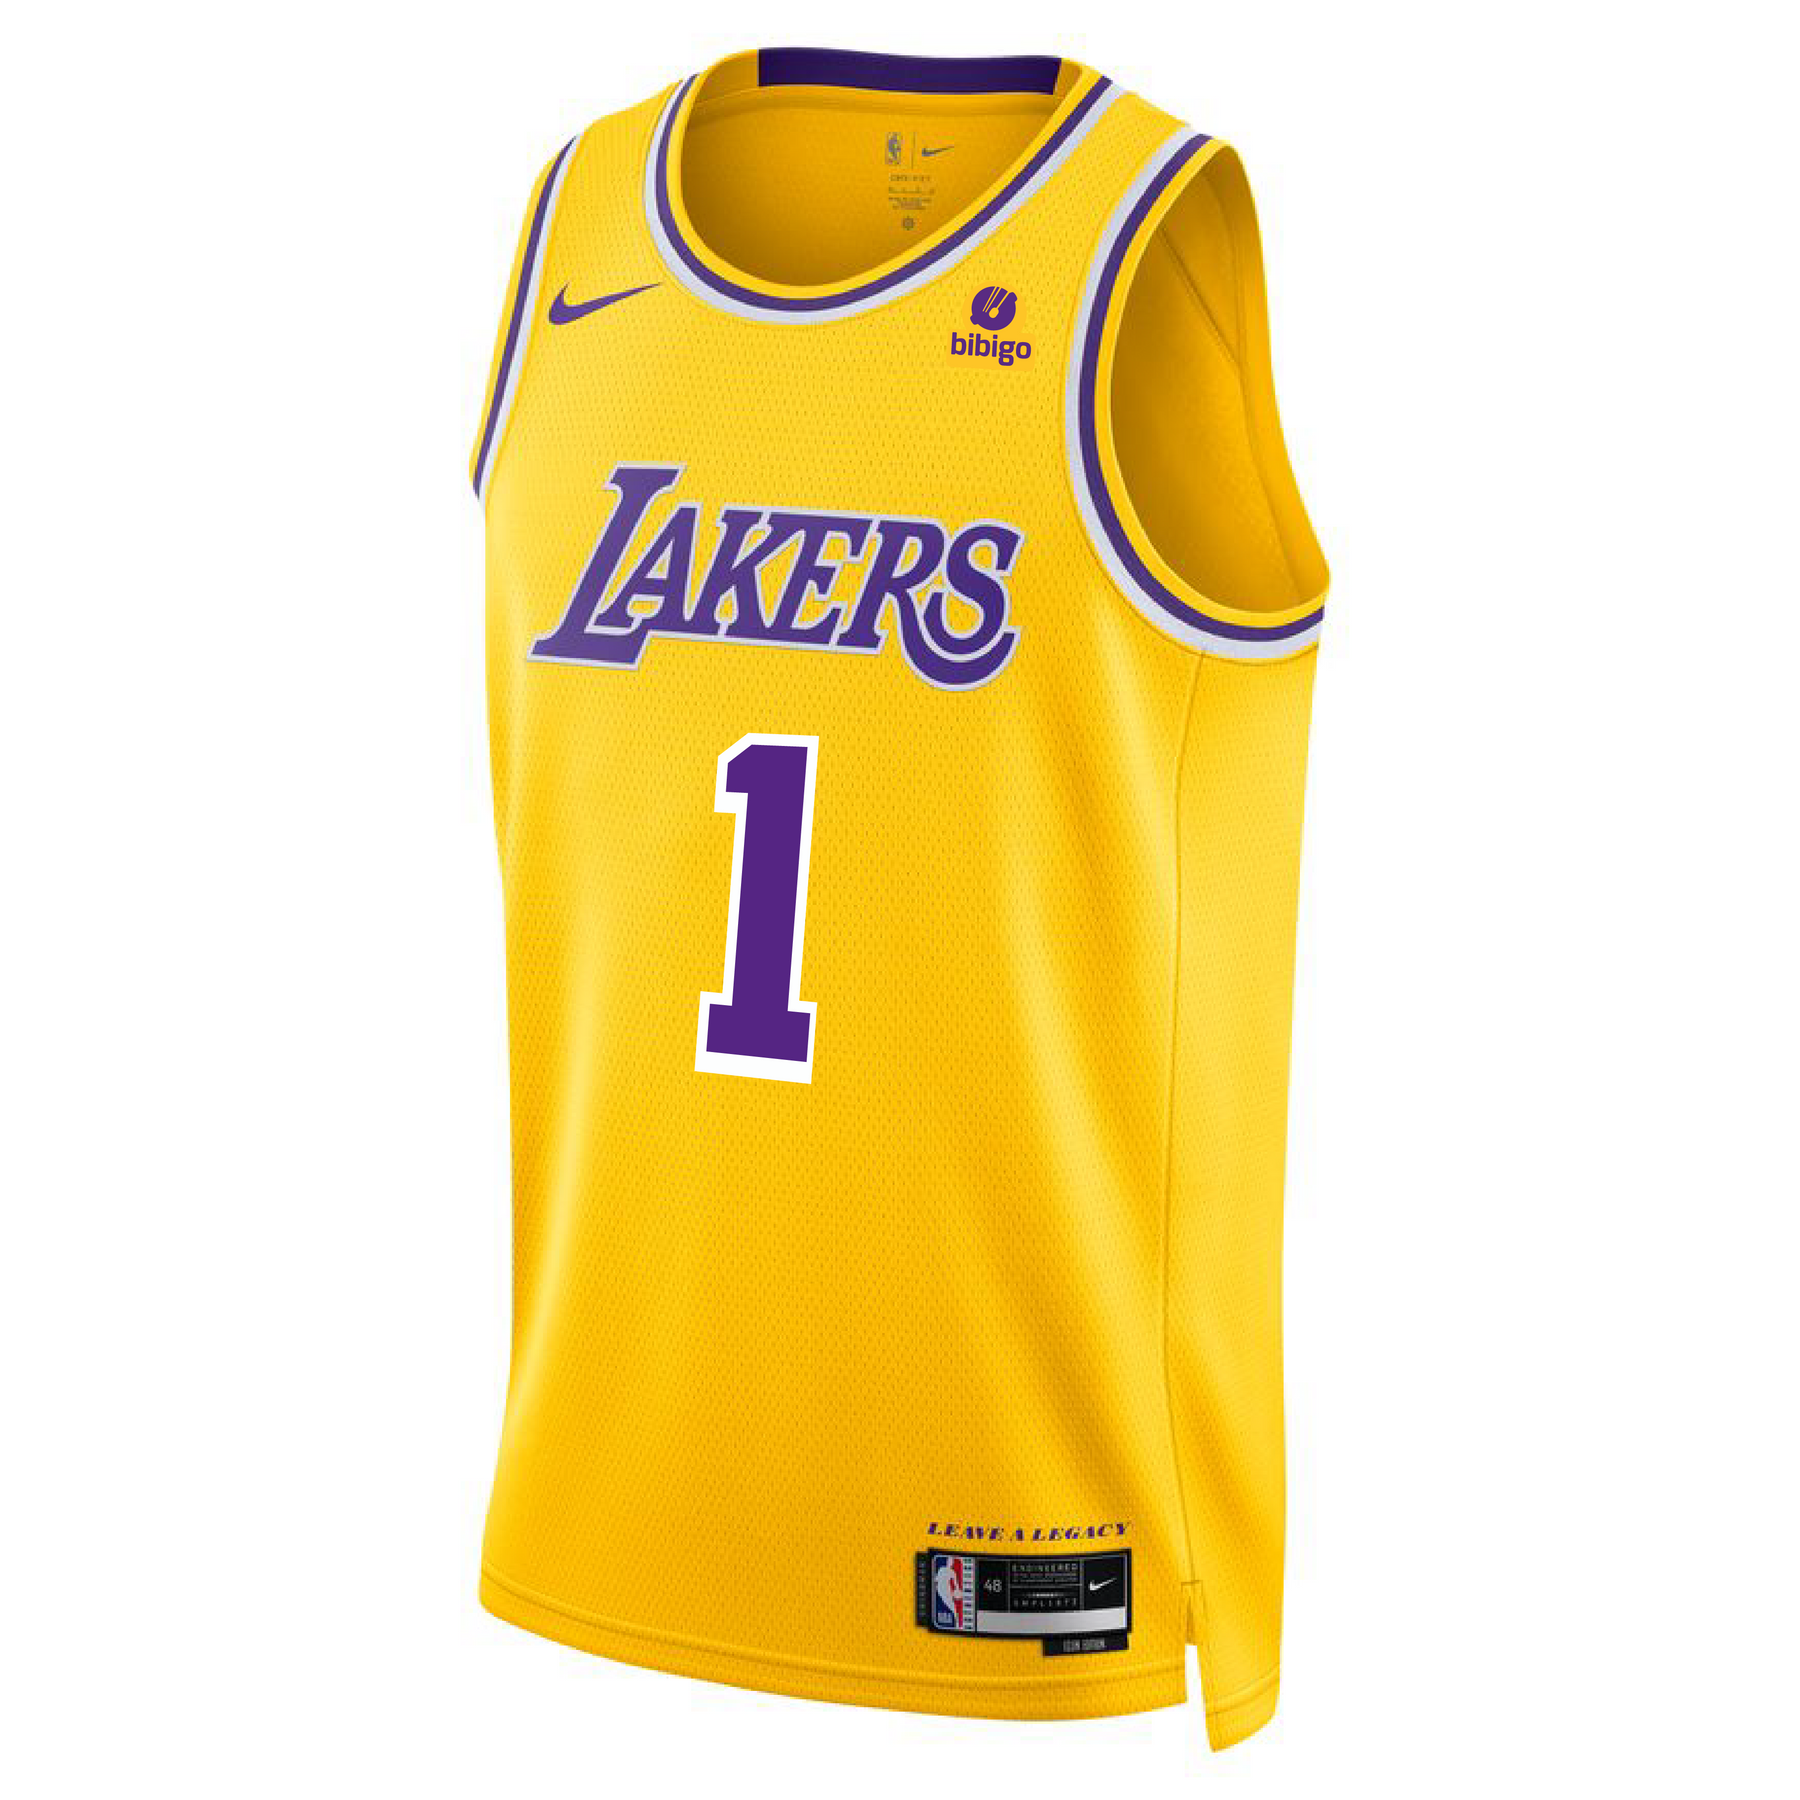 Los Angeles Lakers Jerseys, Lakers Basketball Jerseys